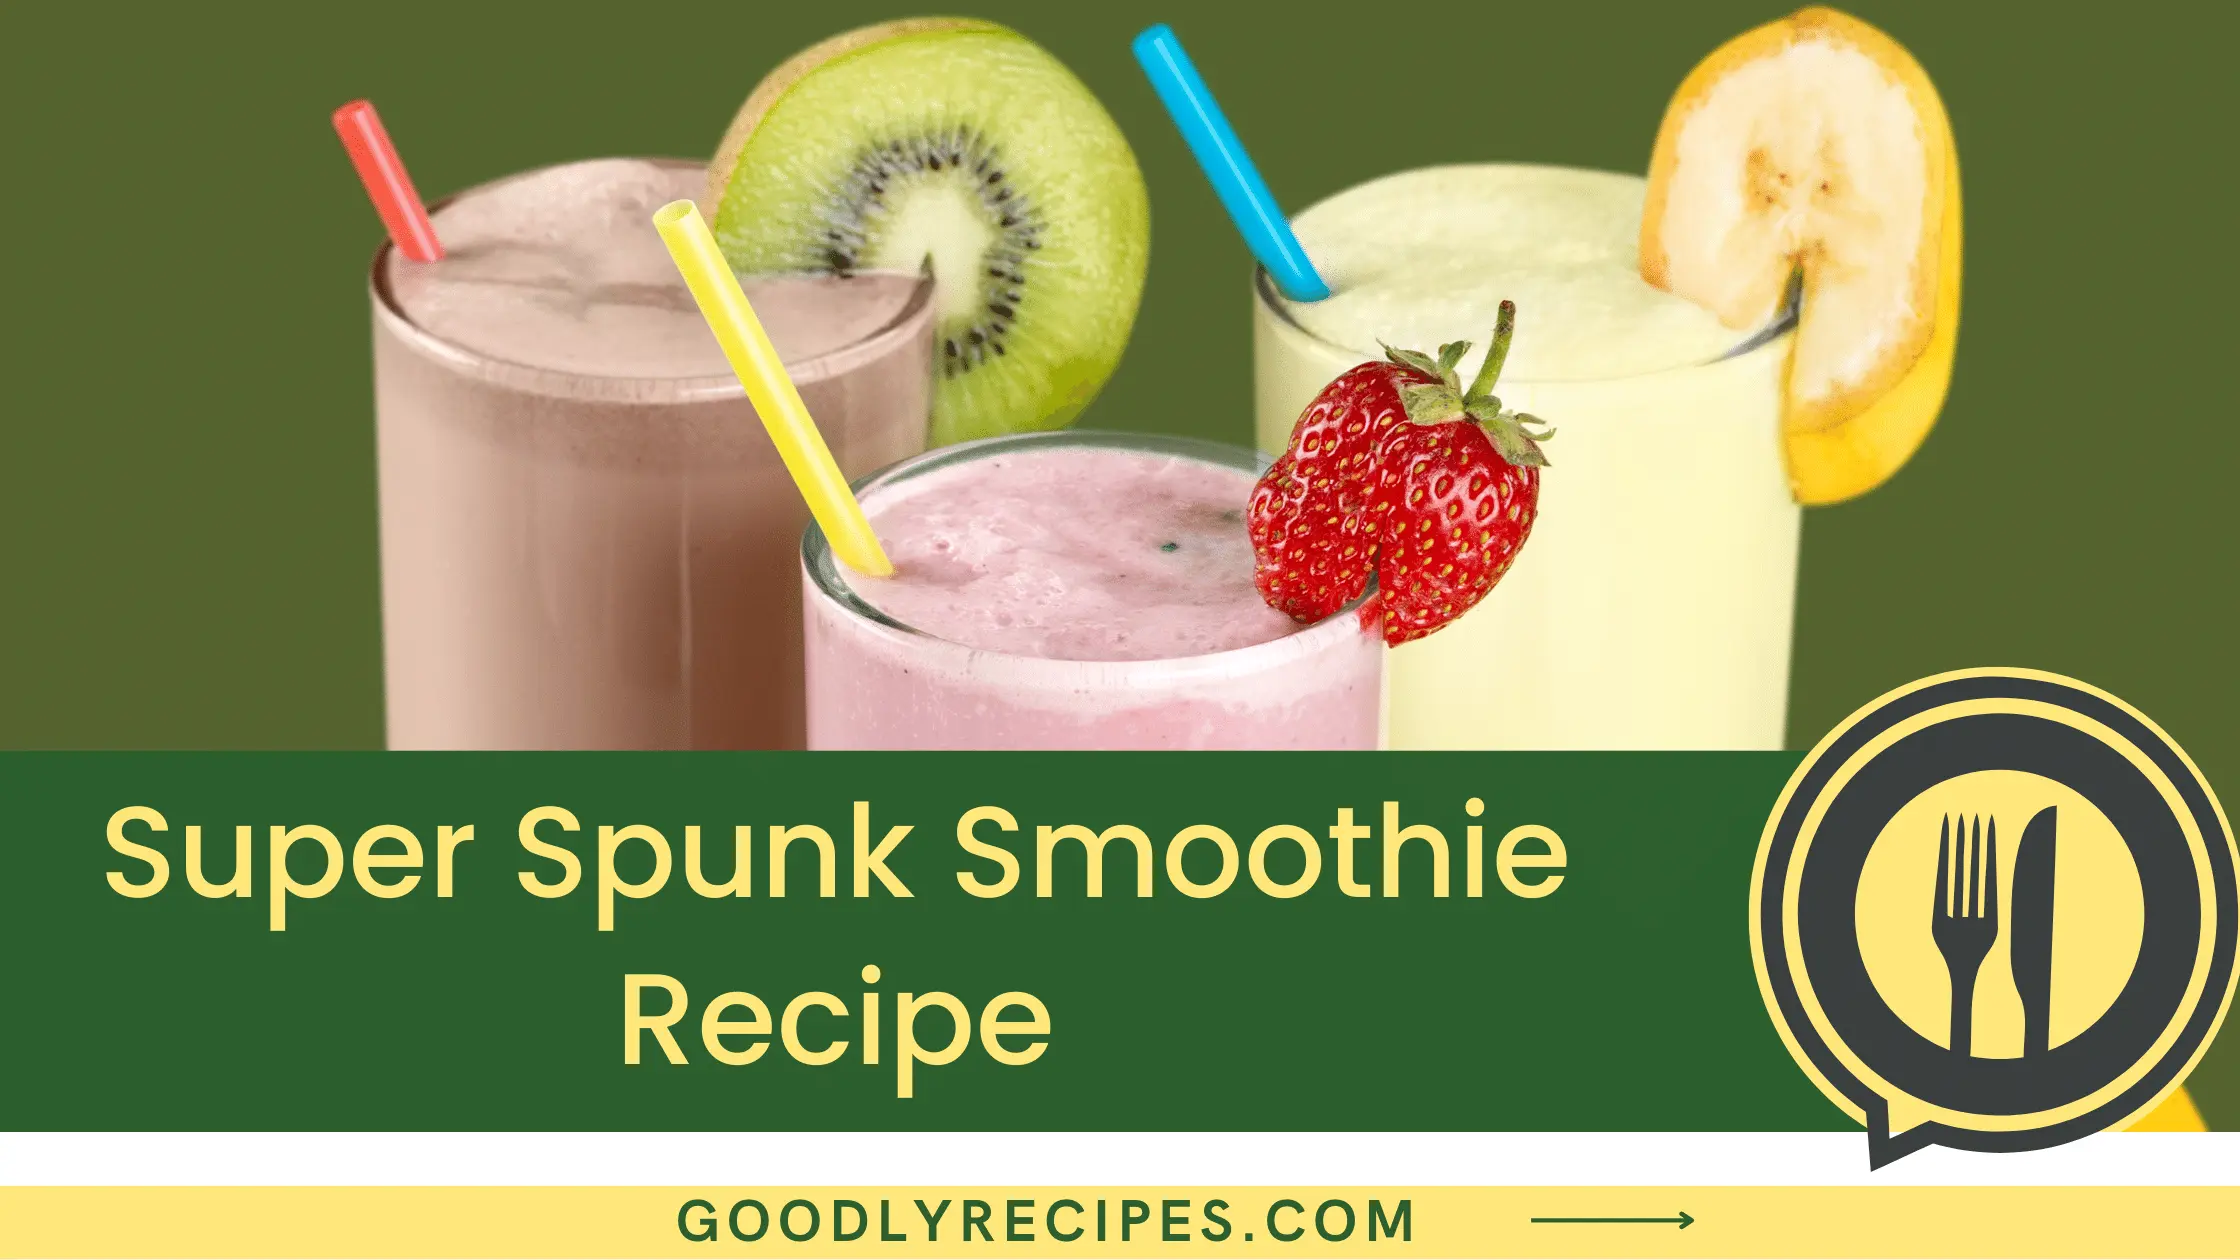 Super Spunk Smoothie Recipe